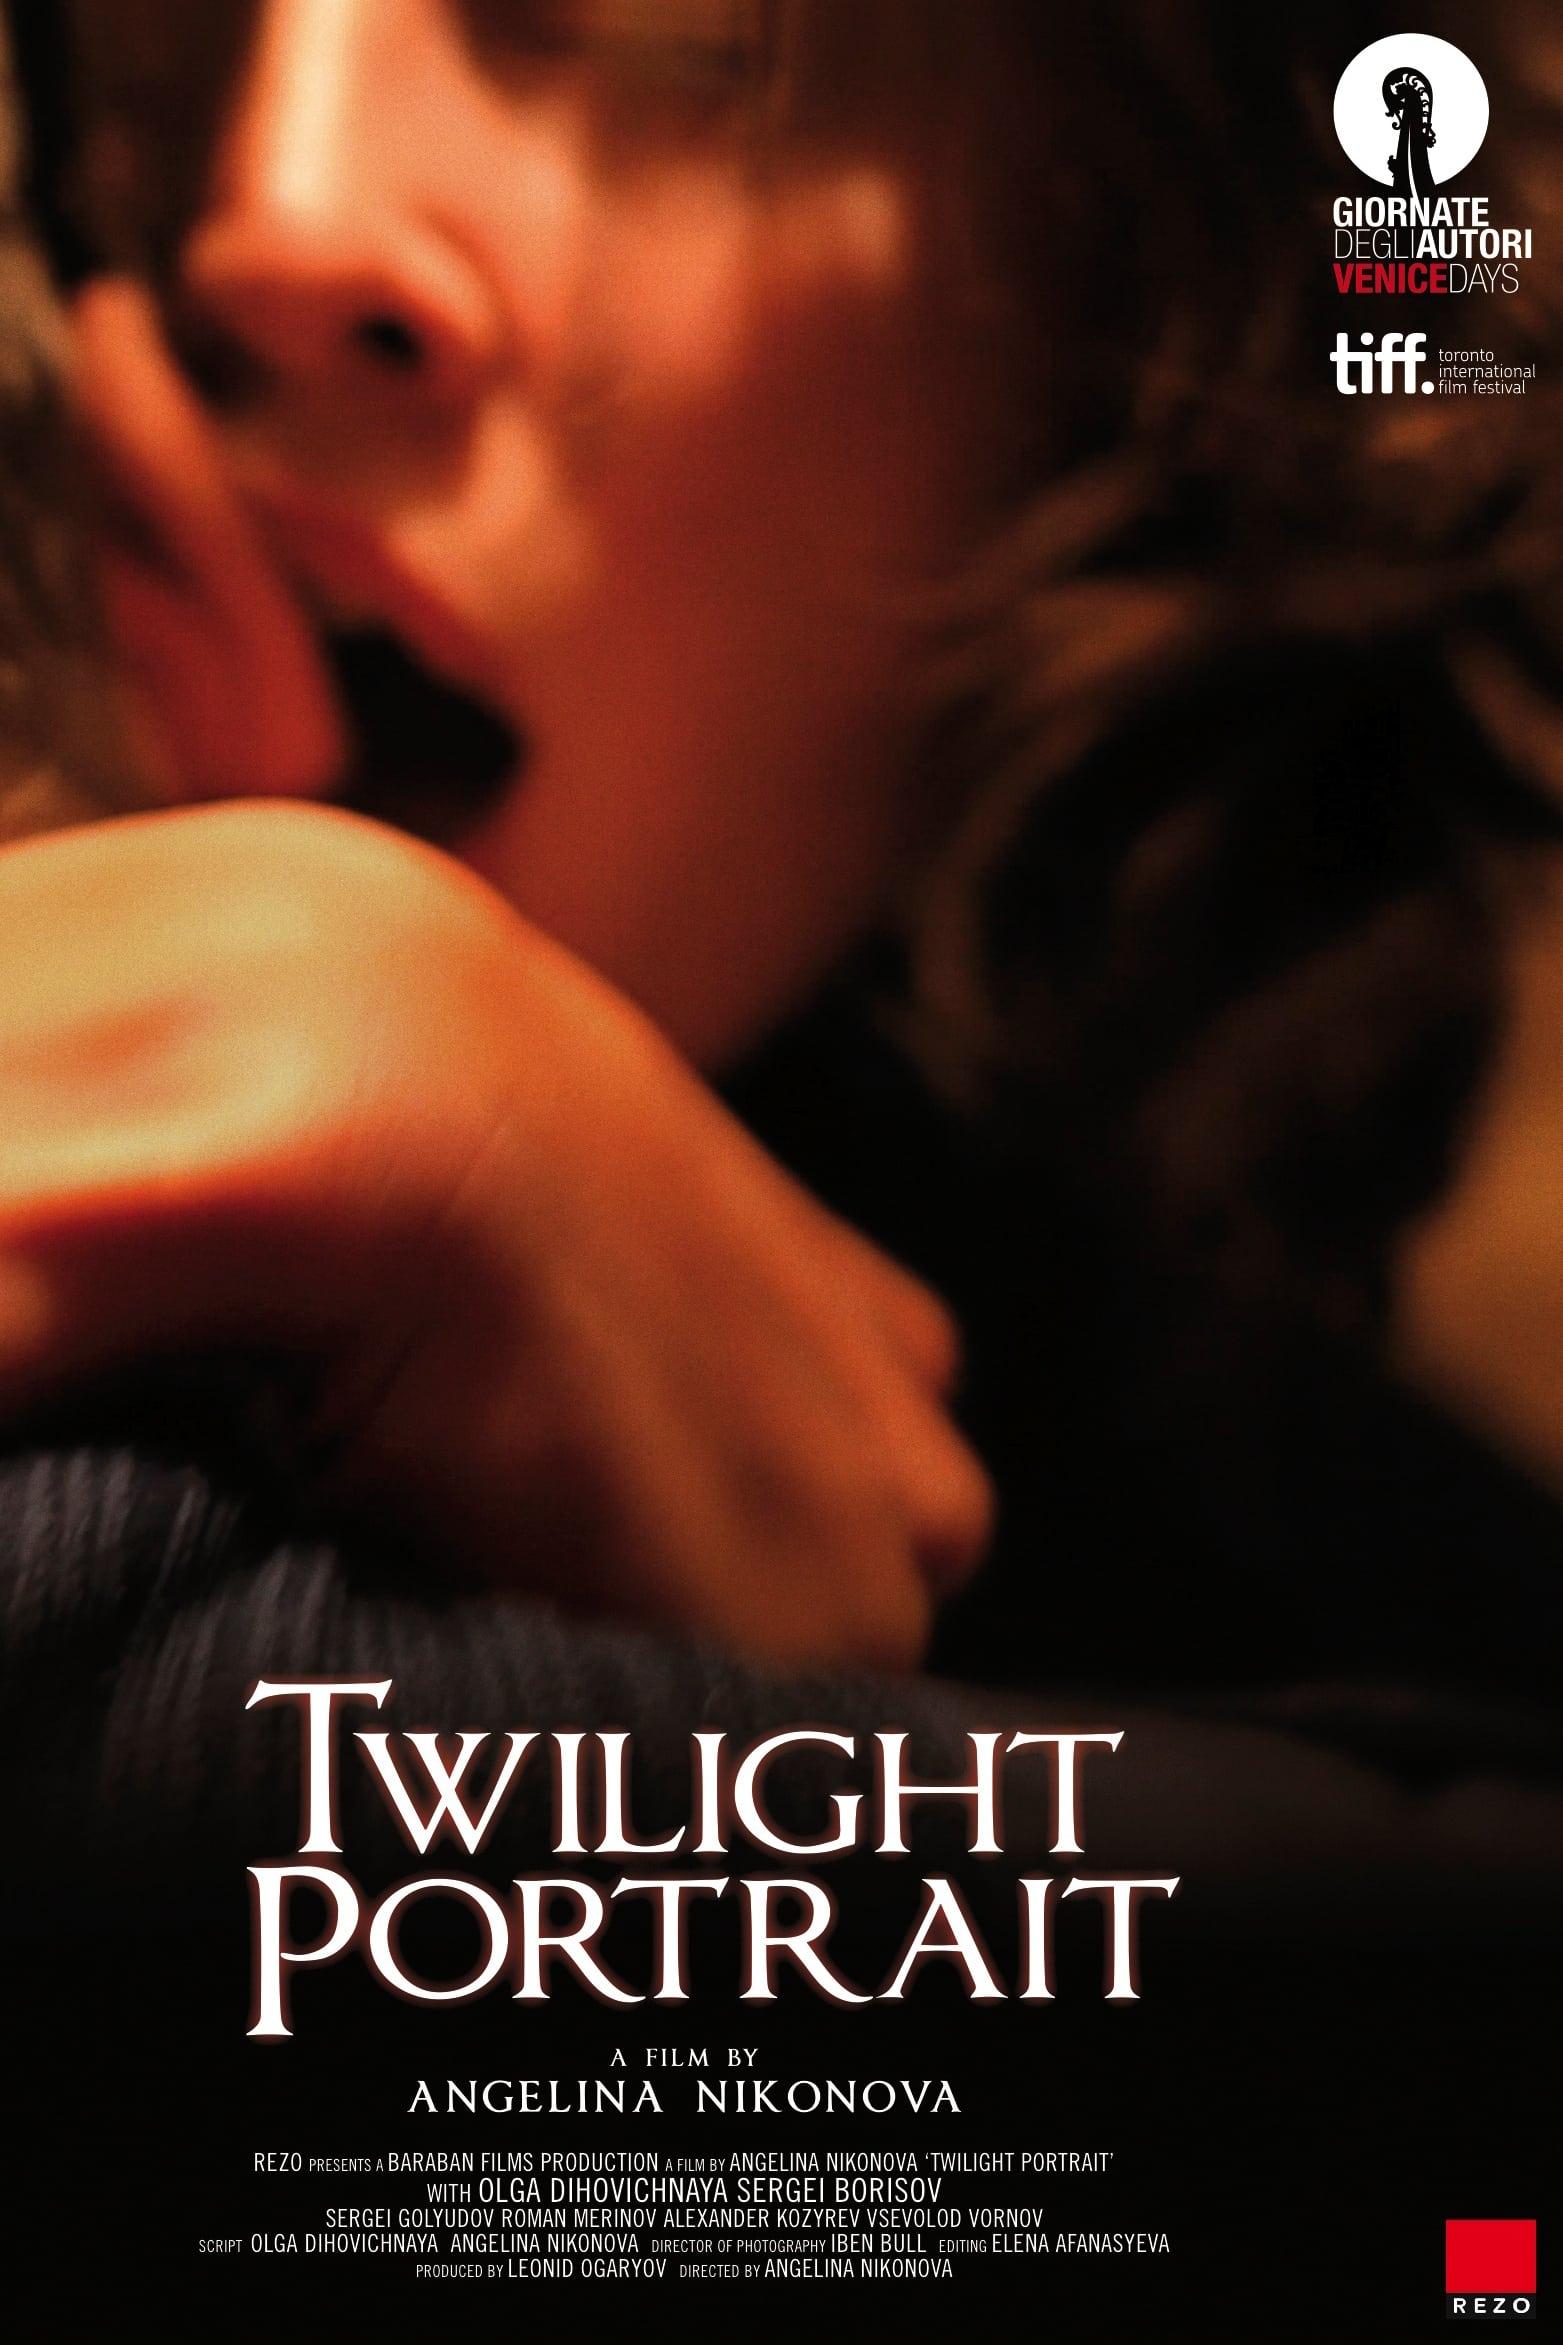 Twilight Portrait poster